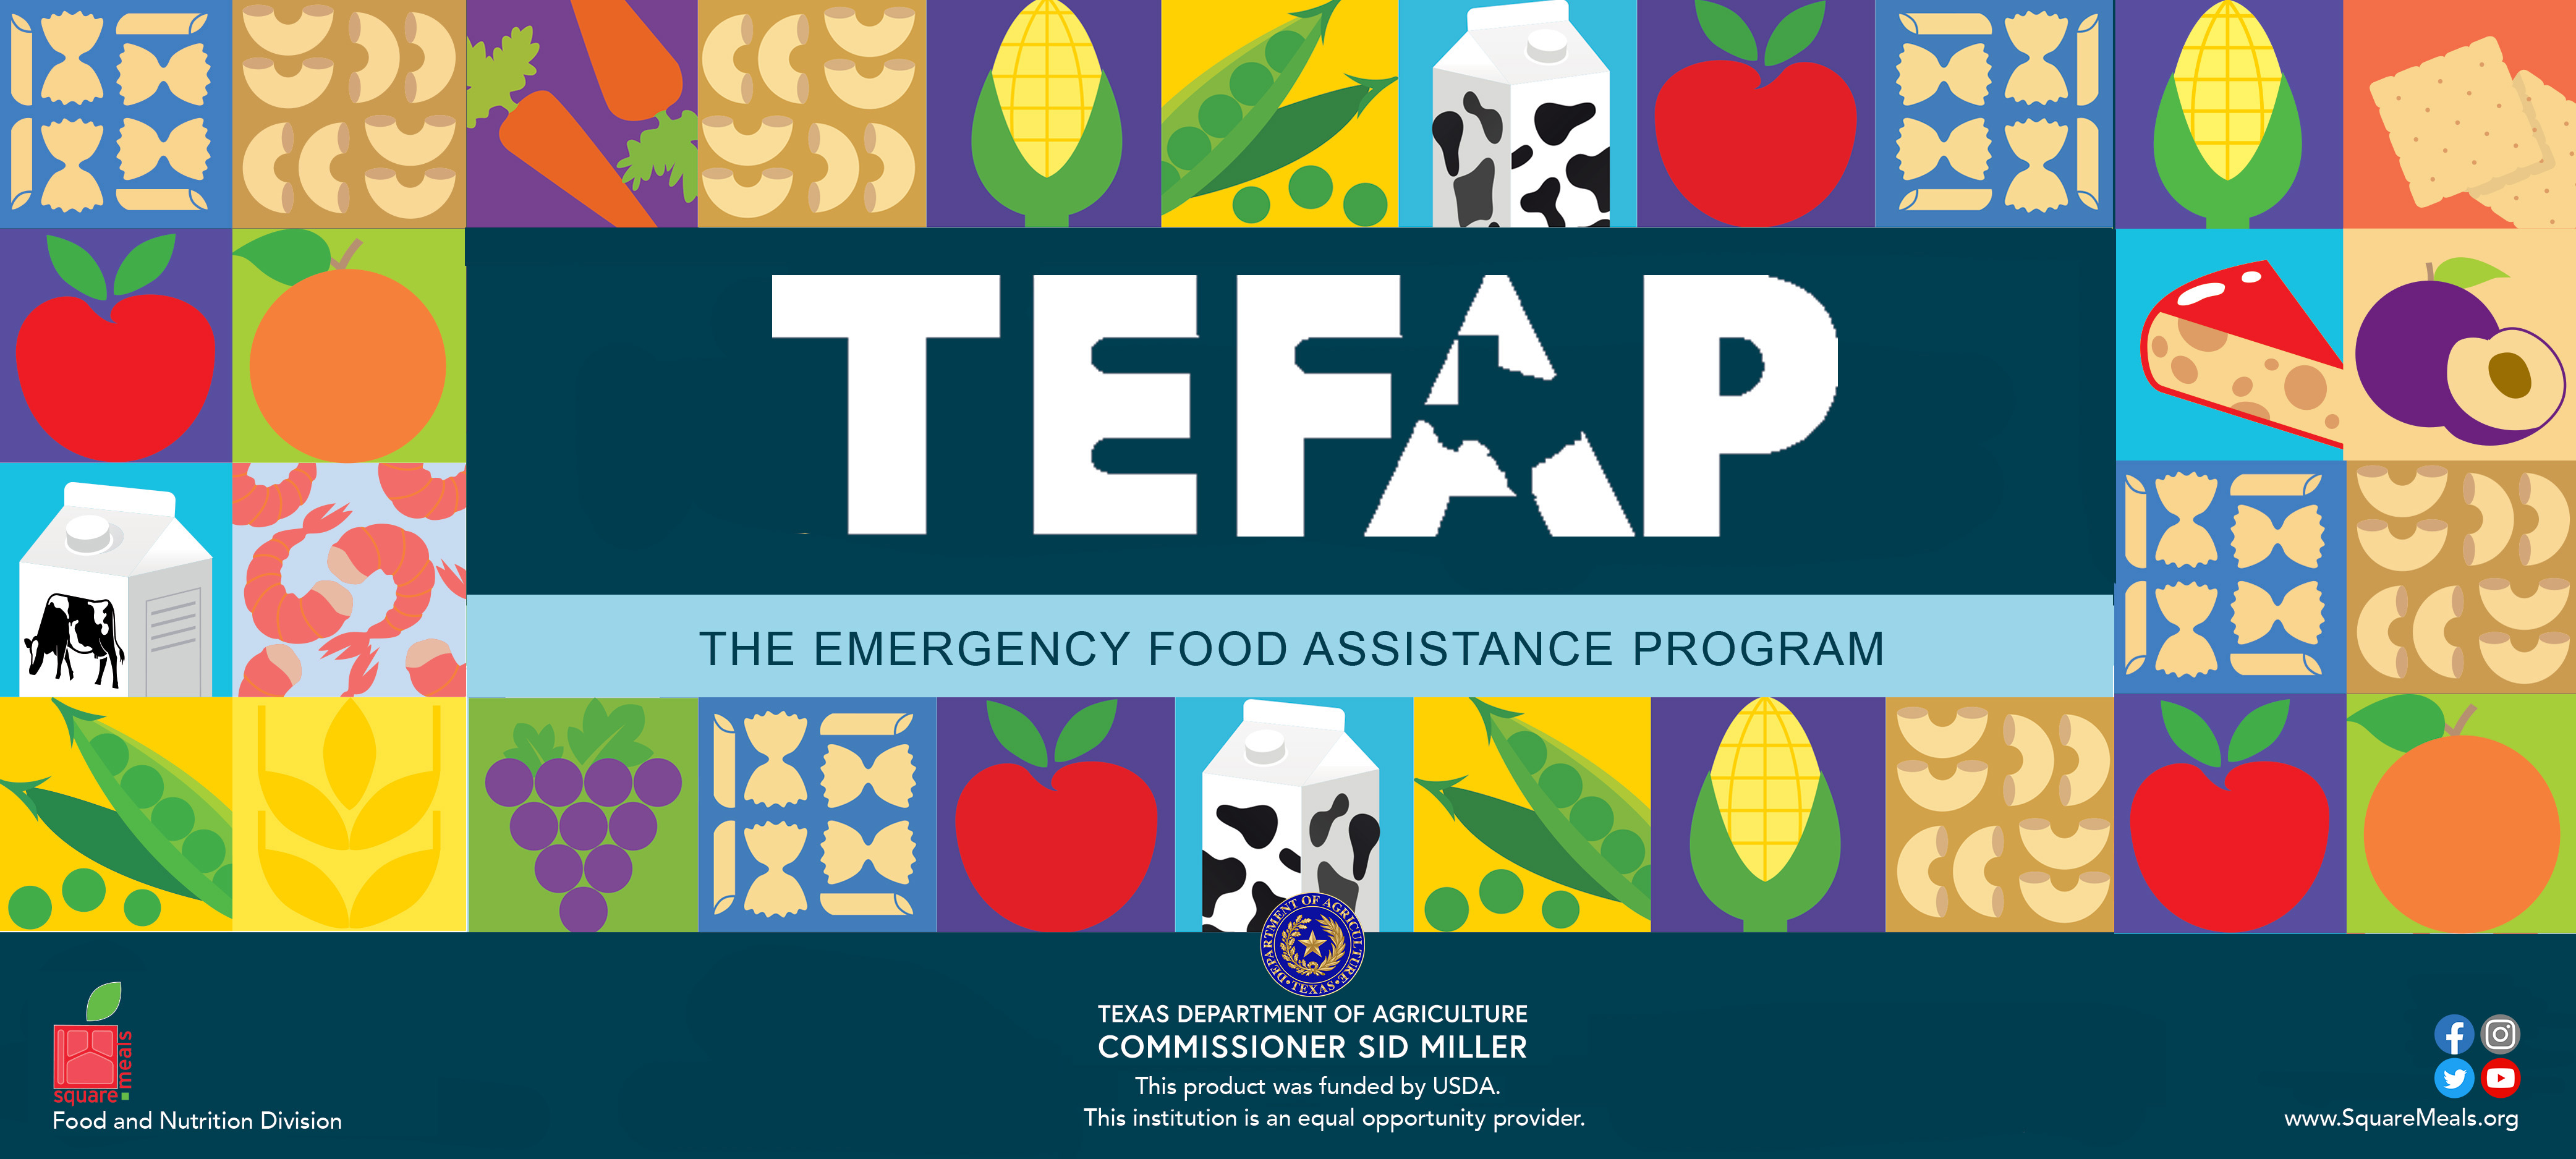 Texas Emergency Food Assistance Program Banner